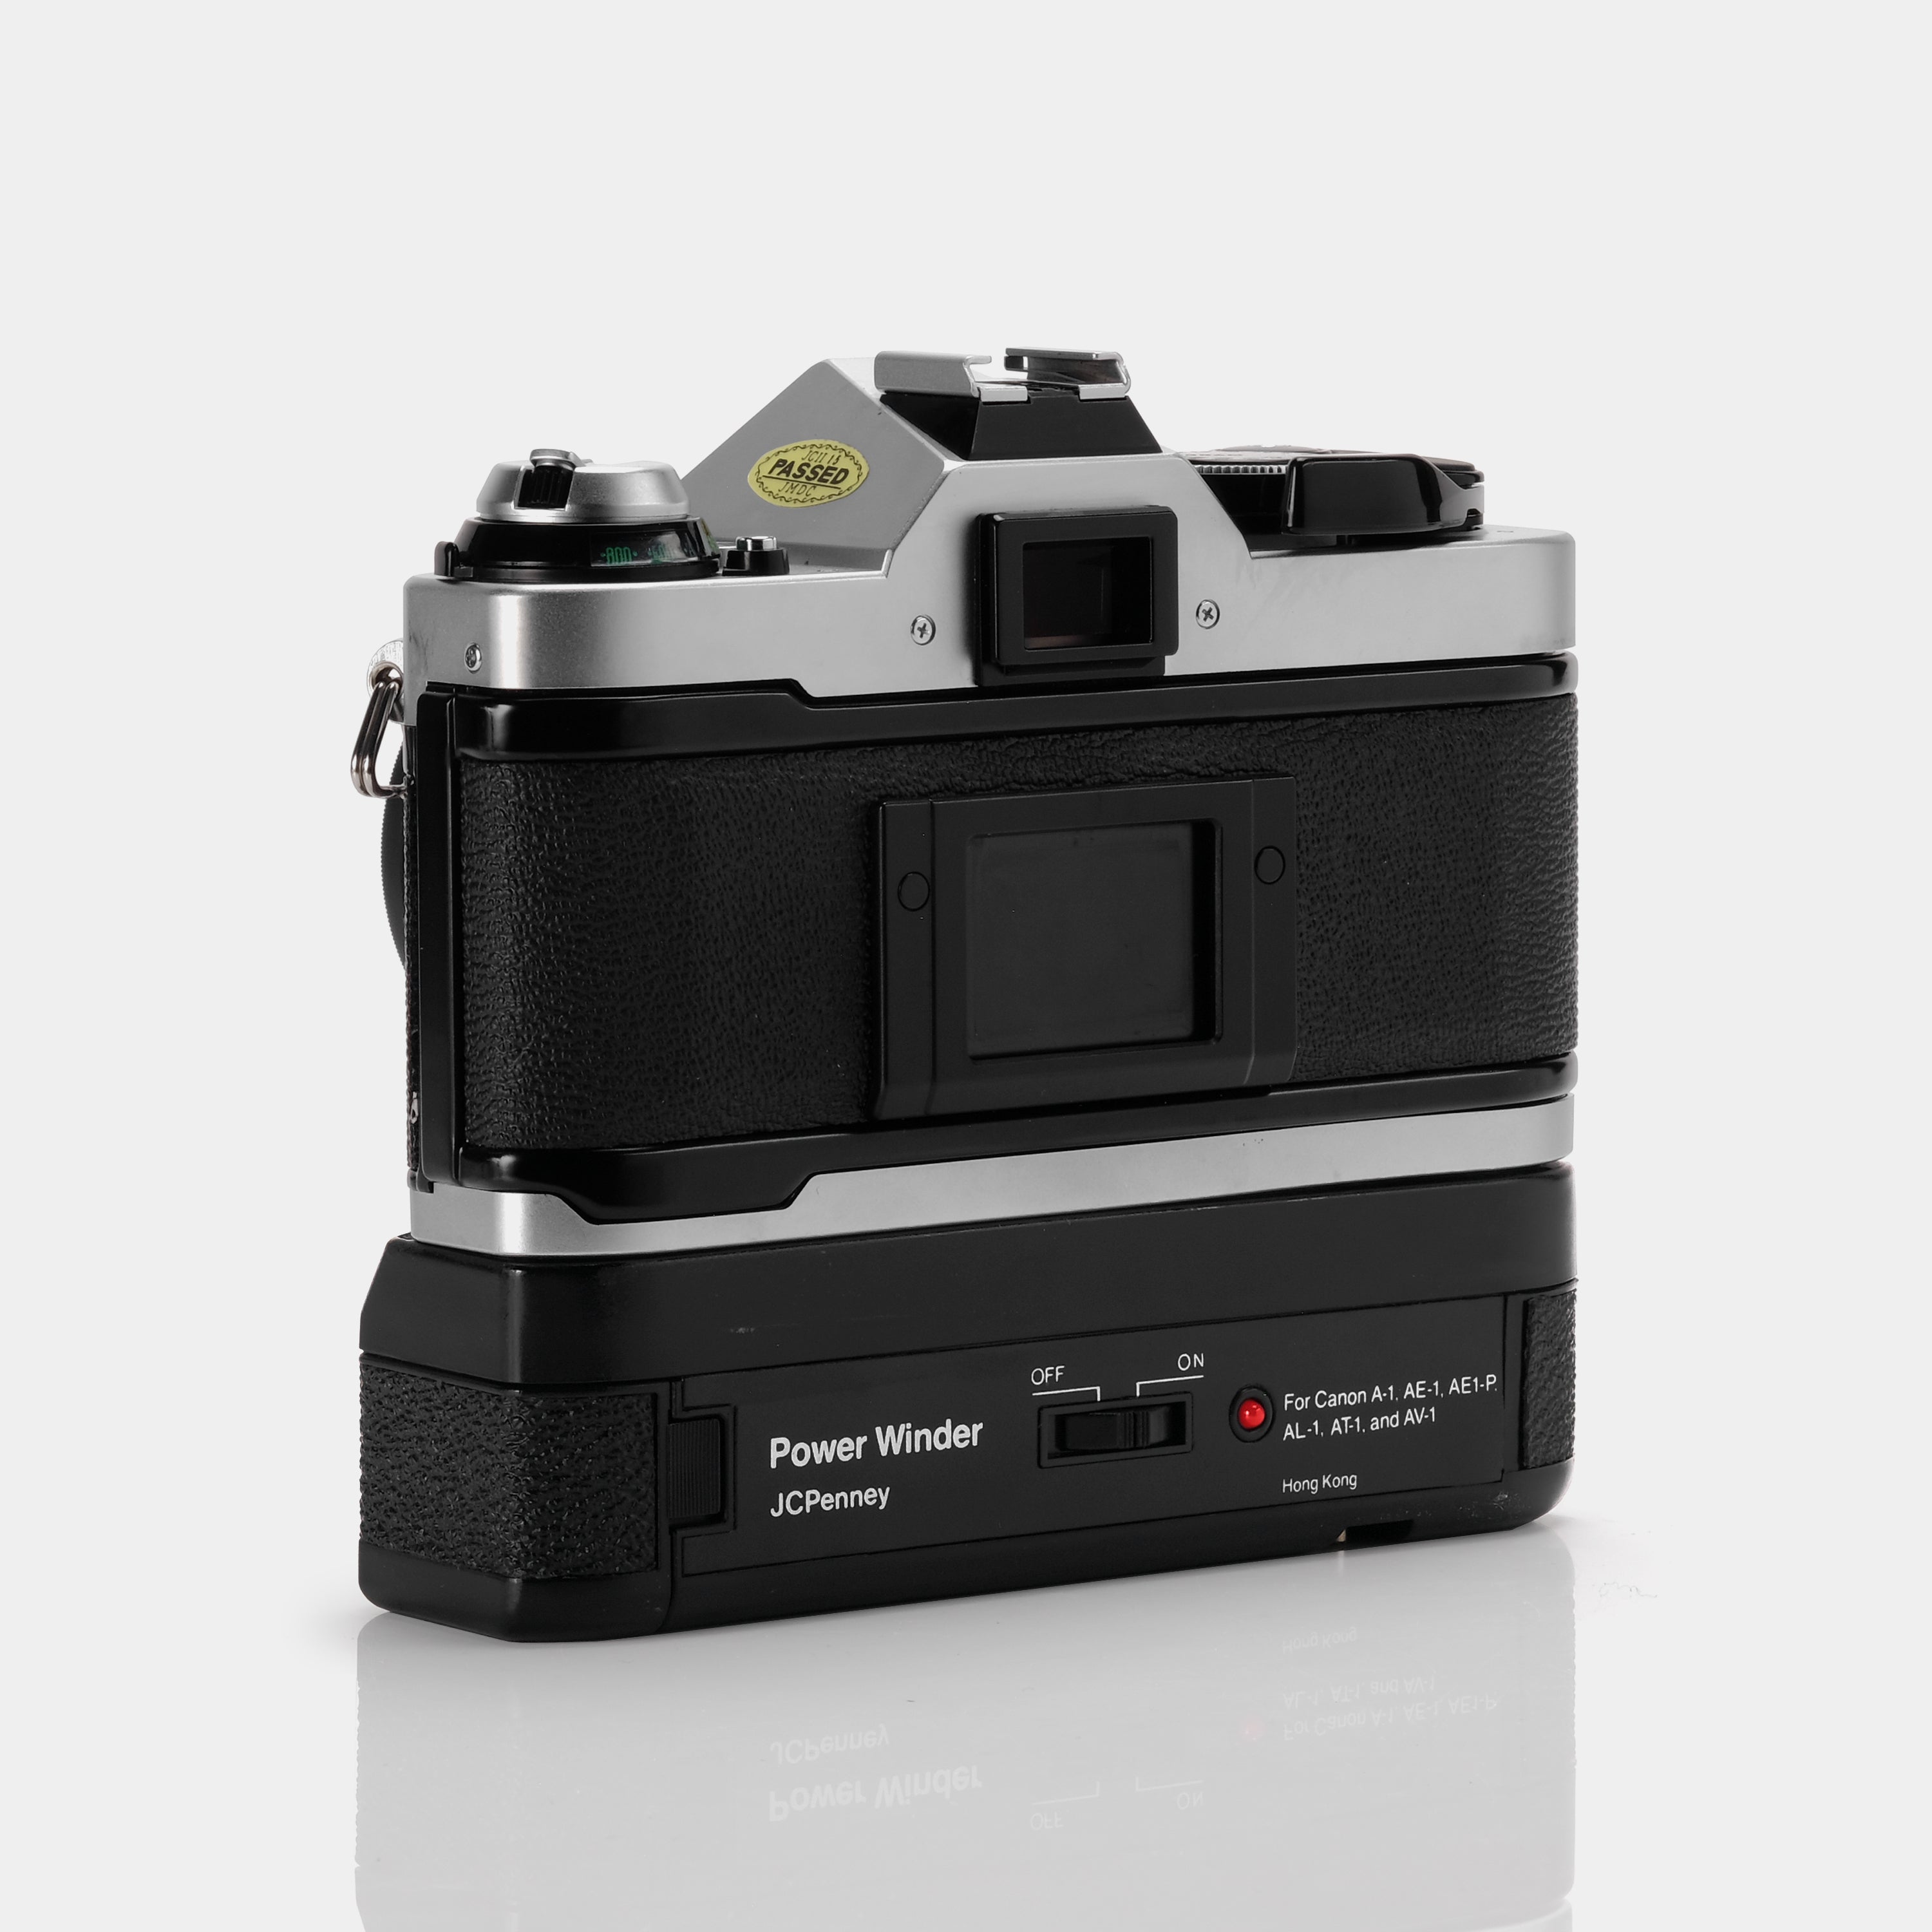 Canon AE-1 Program SLR 35mm Film Camera (